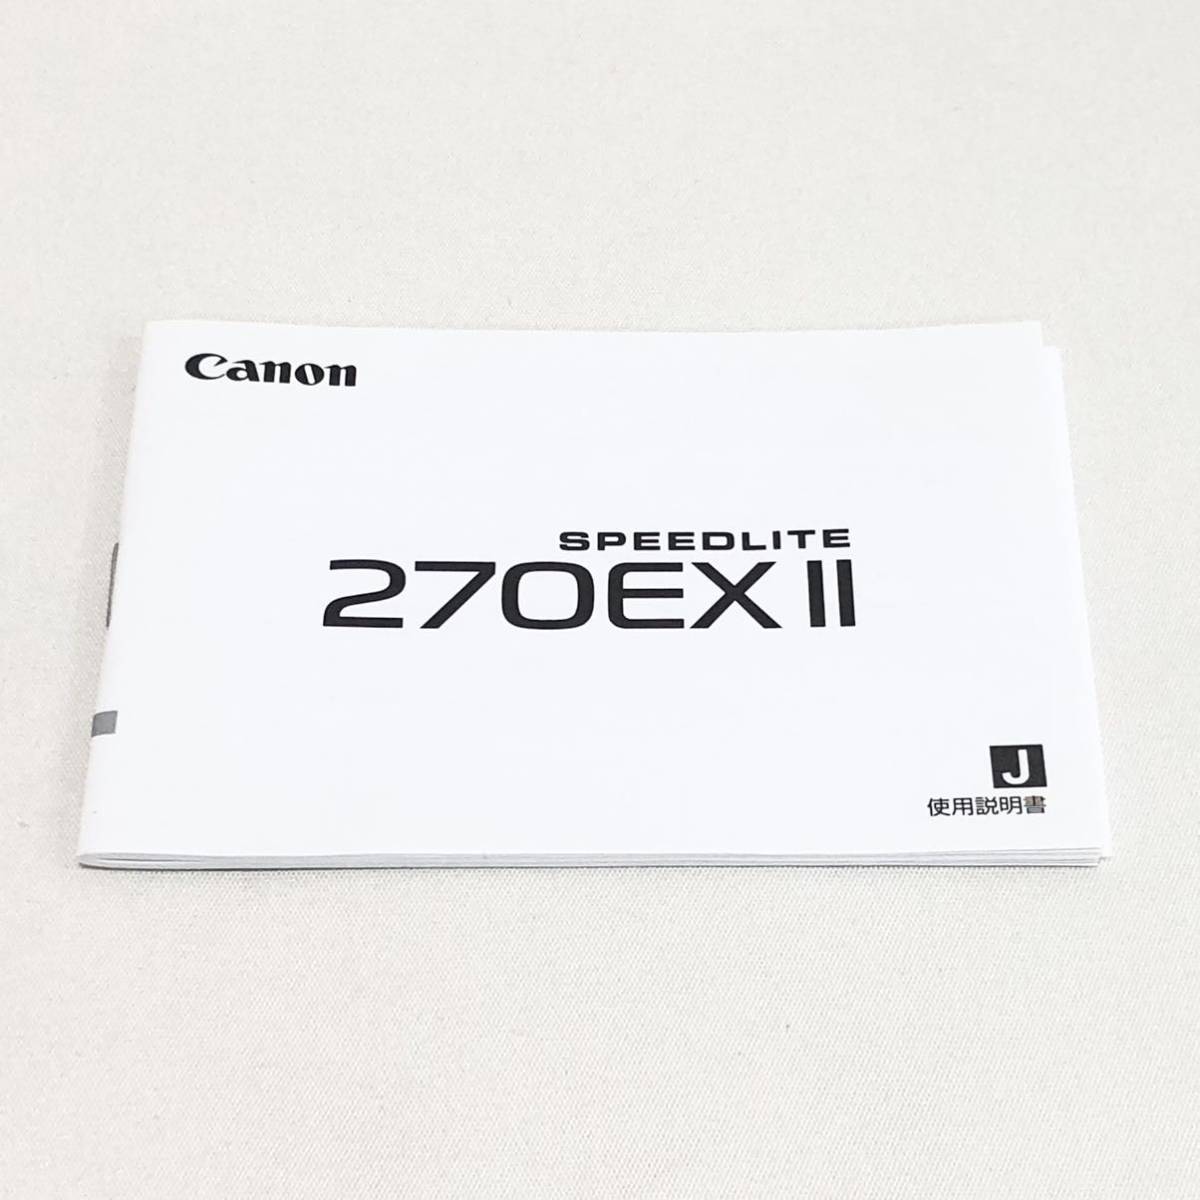 Canon キャノン SPEEDLITE 270EX II 純正 スピードライト ディフューザー付き 箱入り キヤノン カメラ用品 ストロボ_画像10